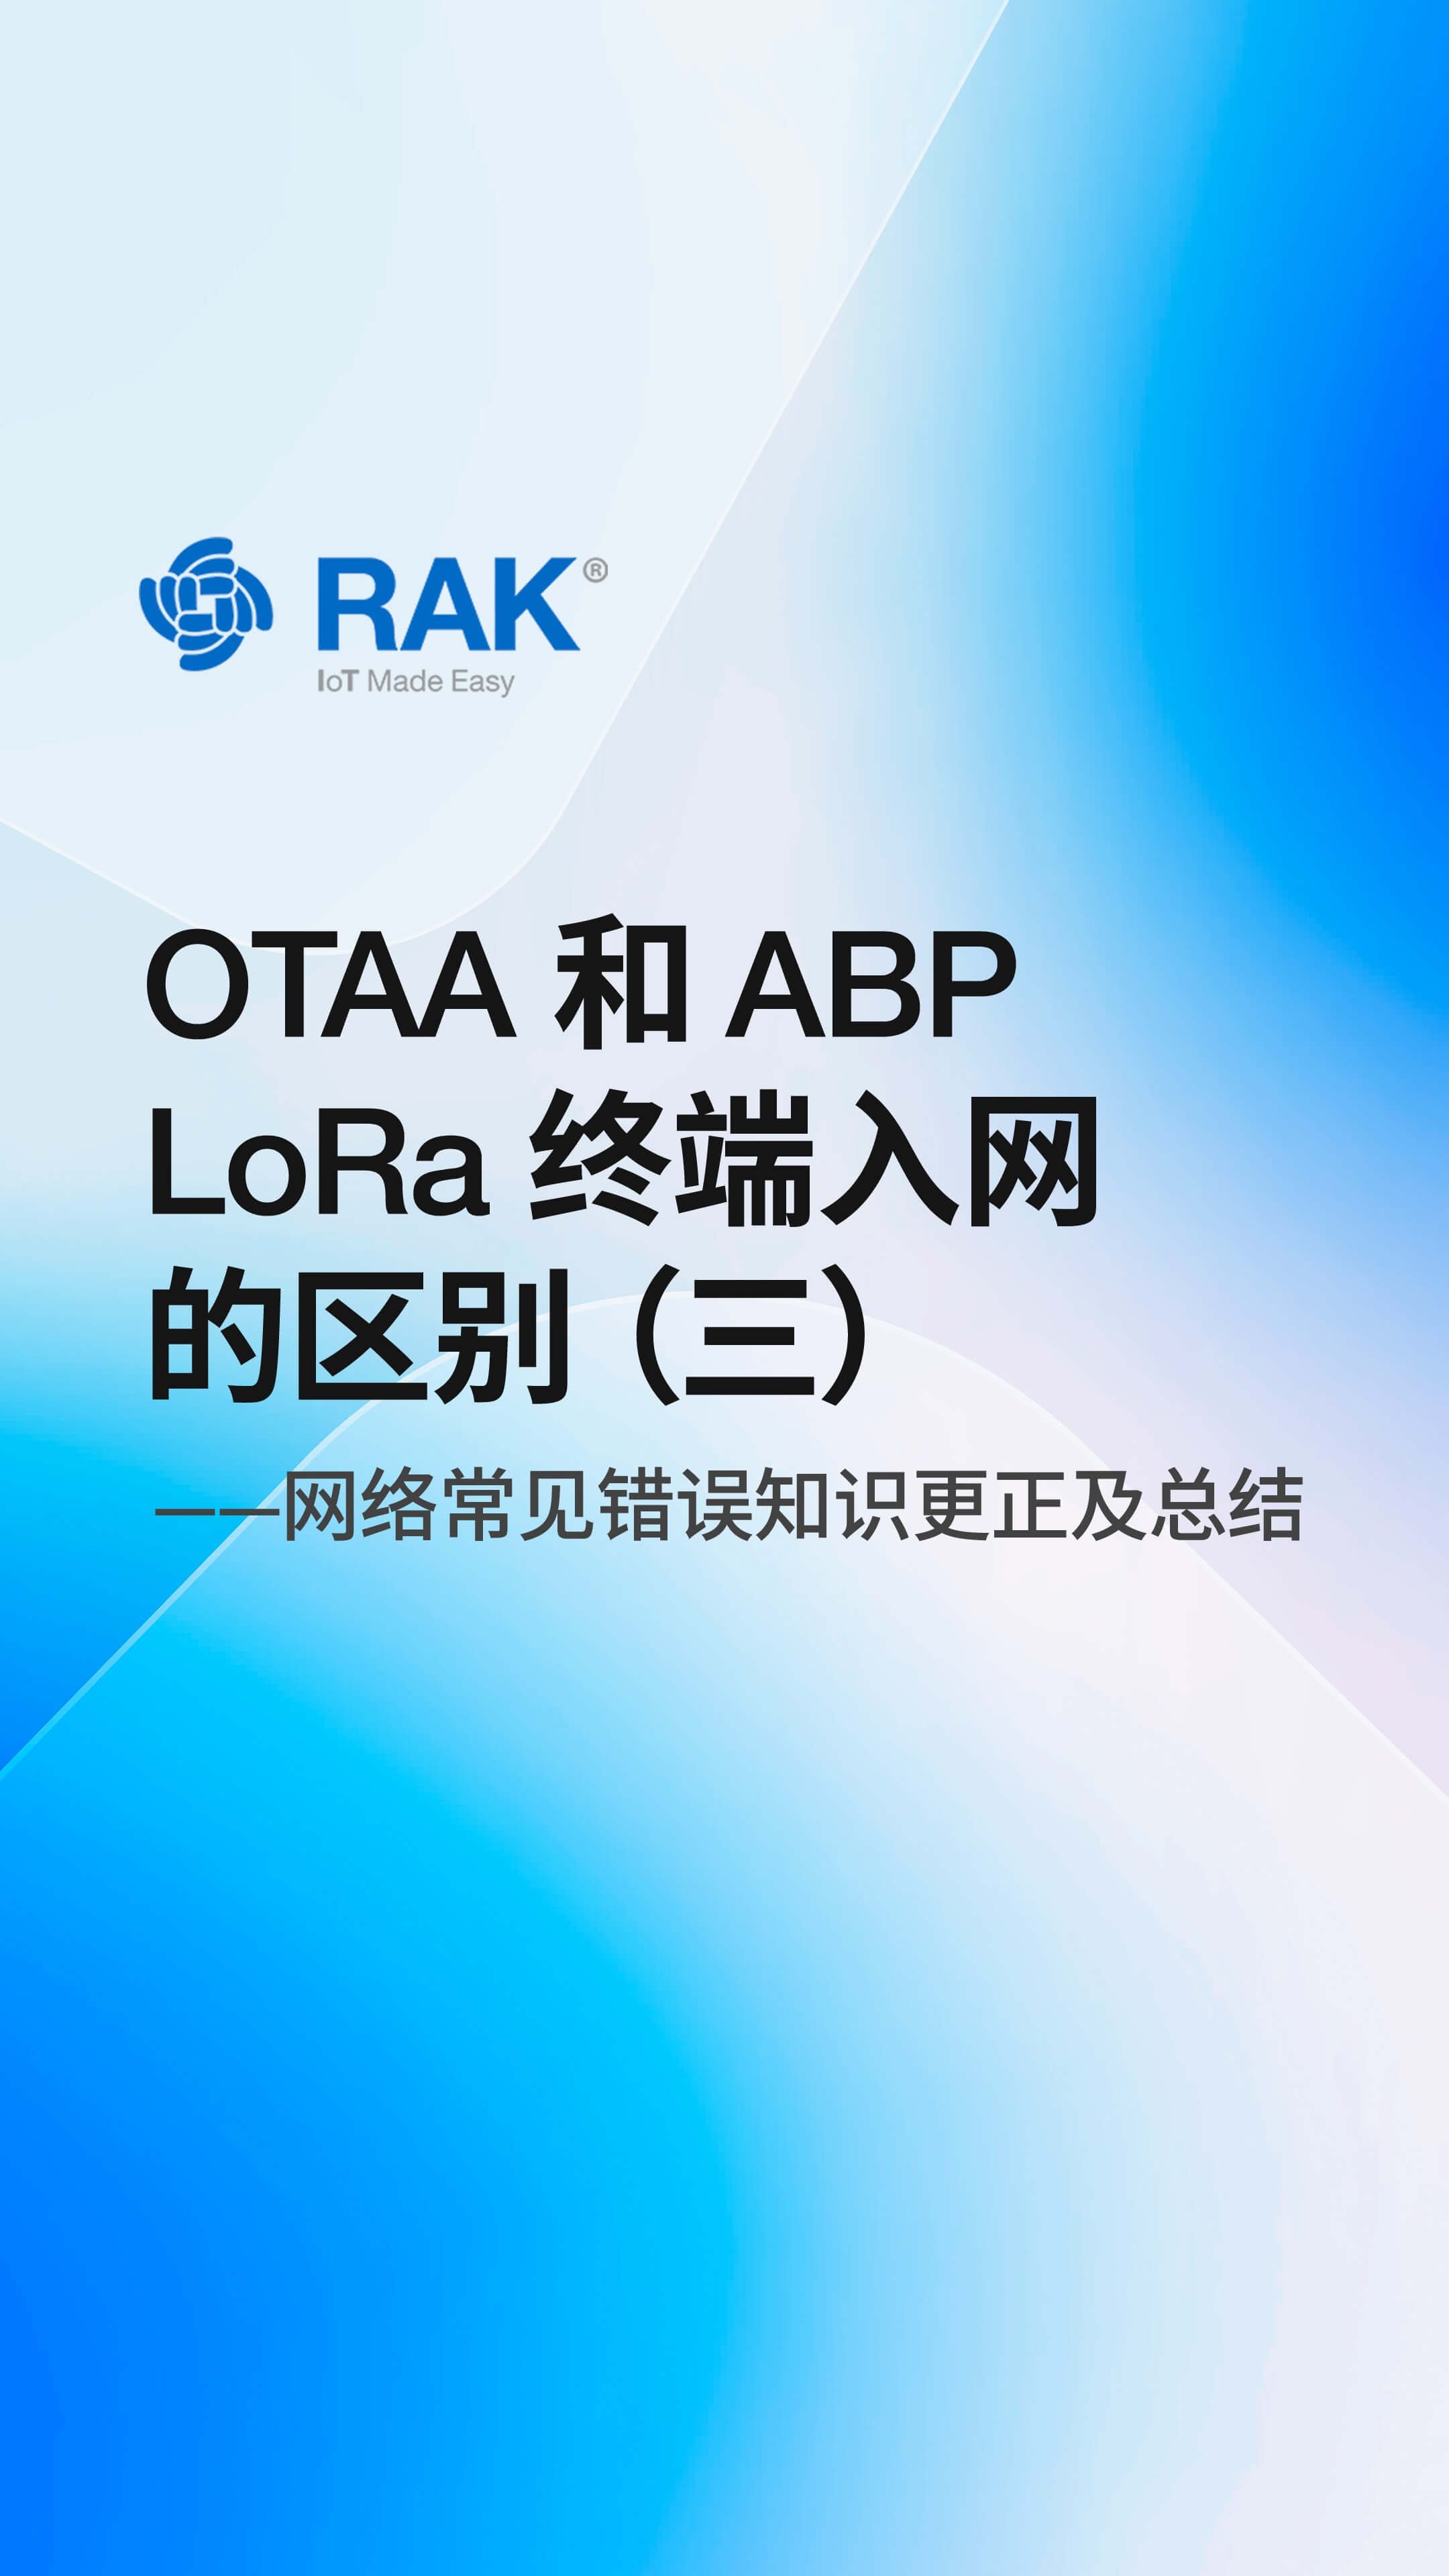 LoRa®终端入网方式OTAA与ABP的区别：网络常见错误知识更正及总结 #LoRa终端  #LoRa故事汇 